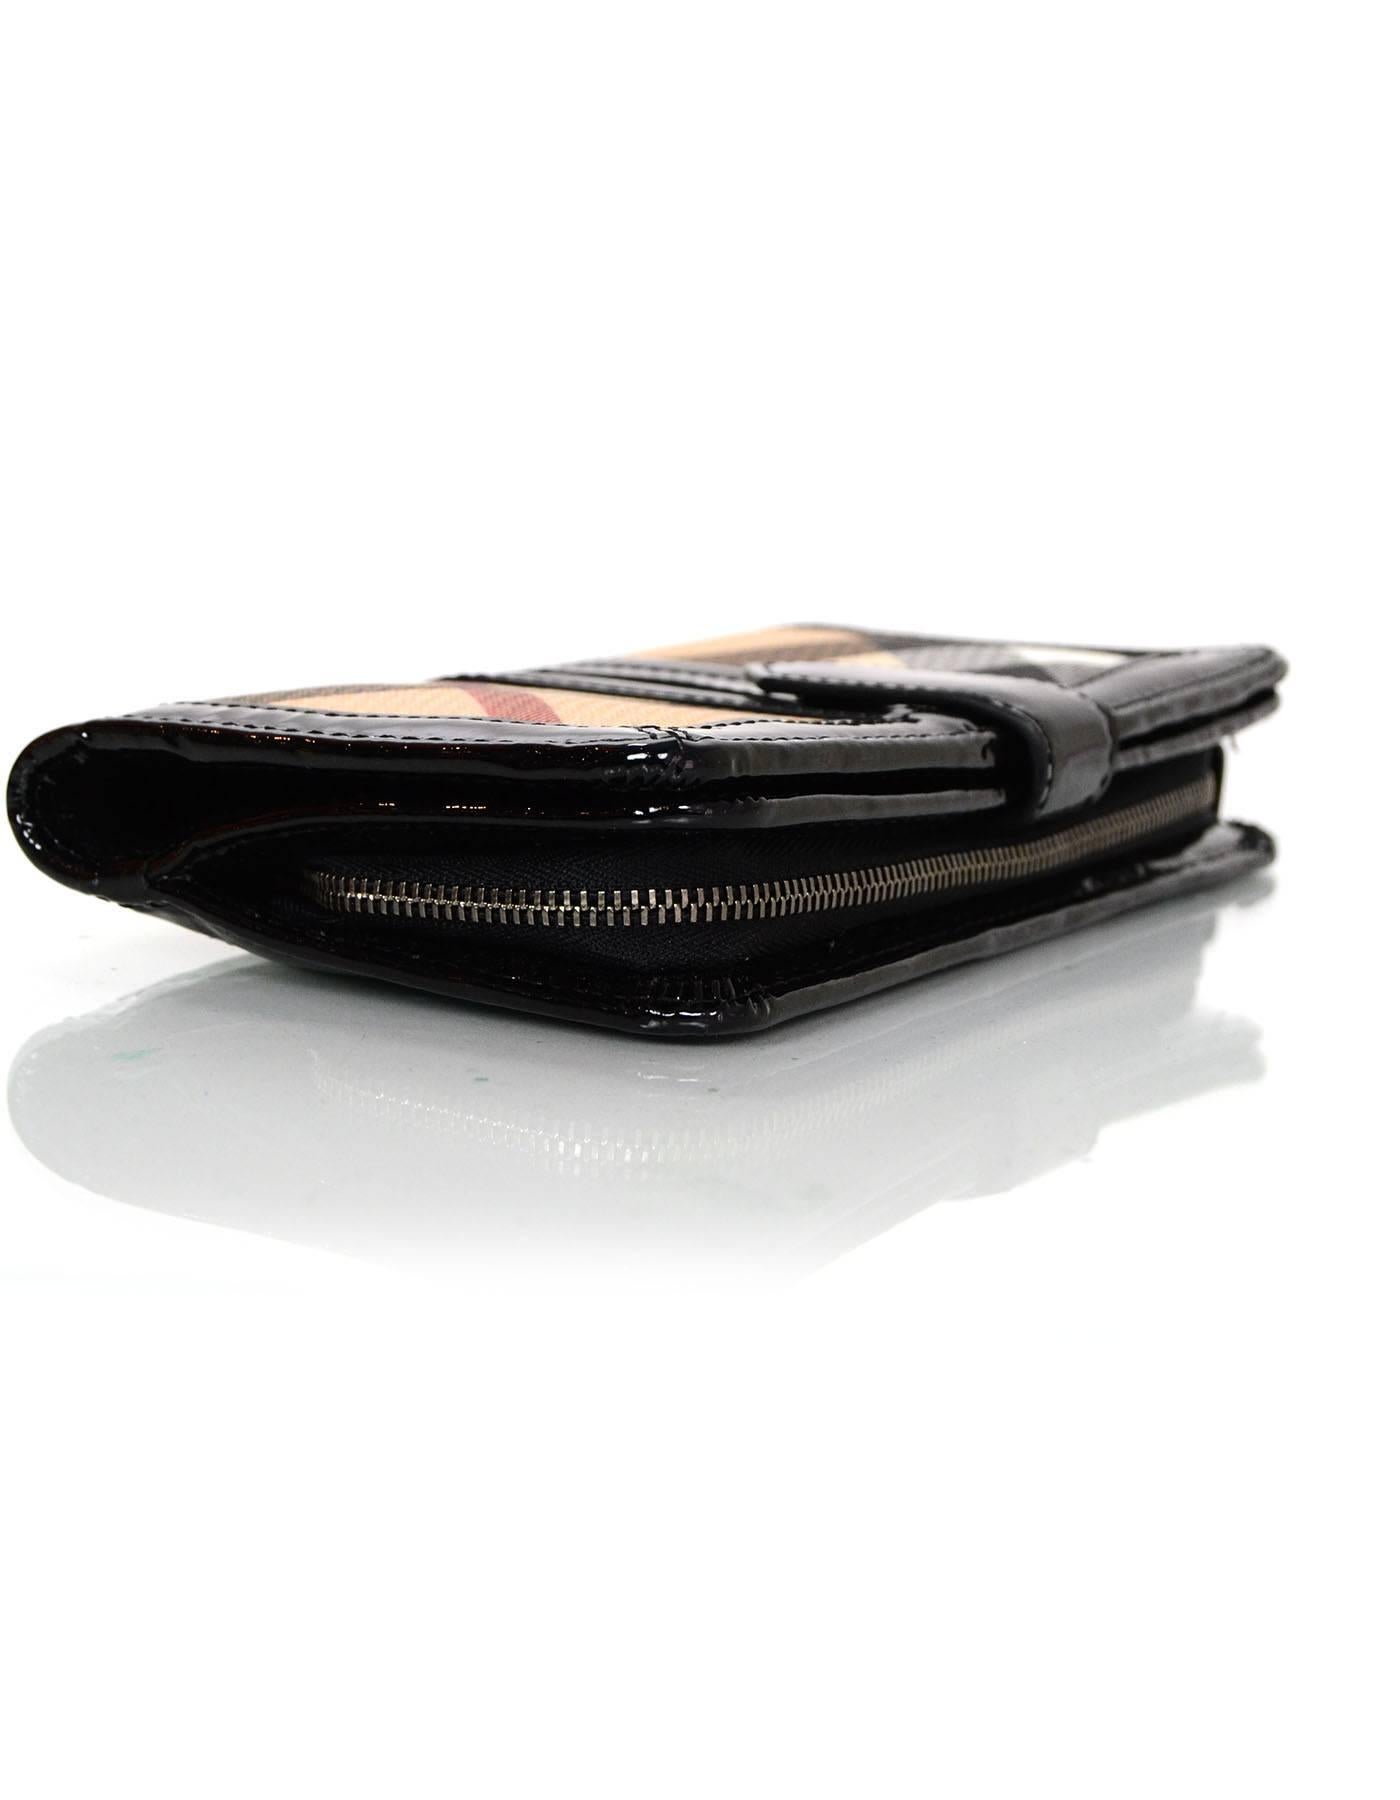 Women's Burberry Black Patent Leather and Nova Plaid Wallet